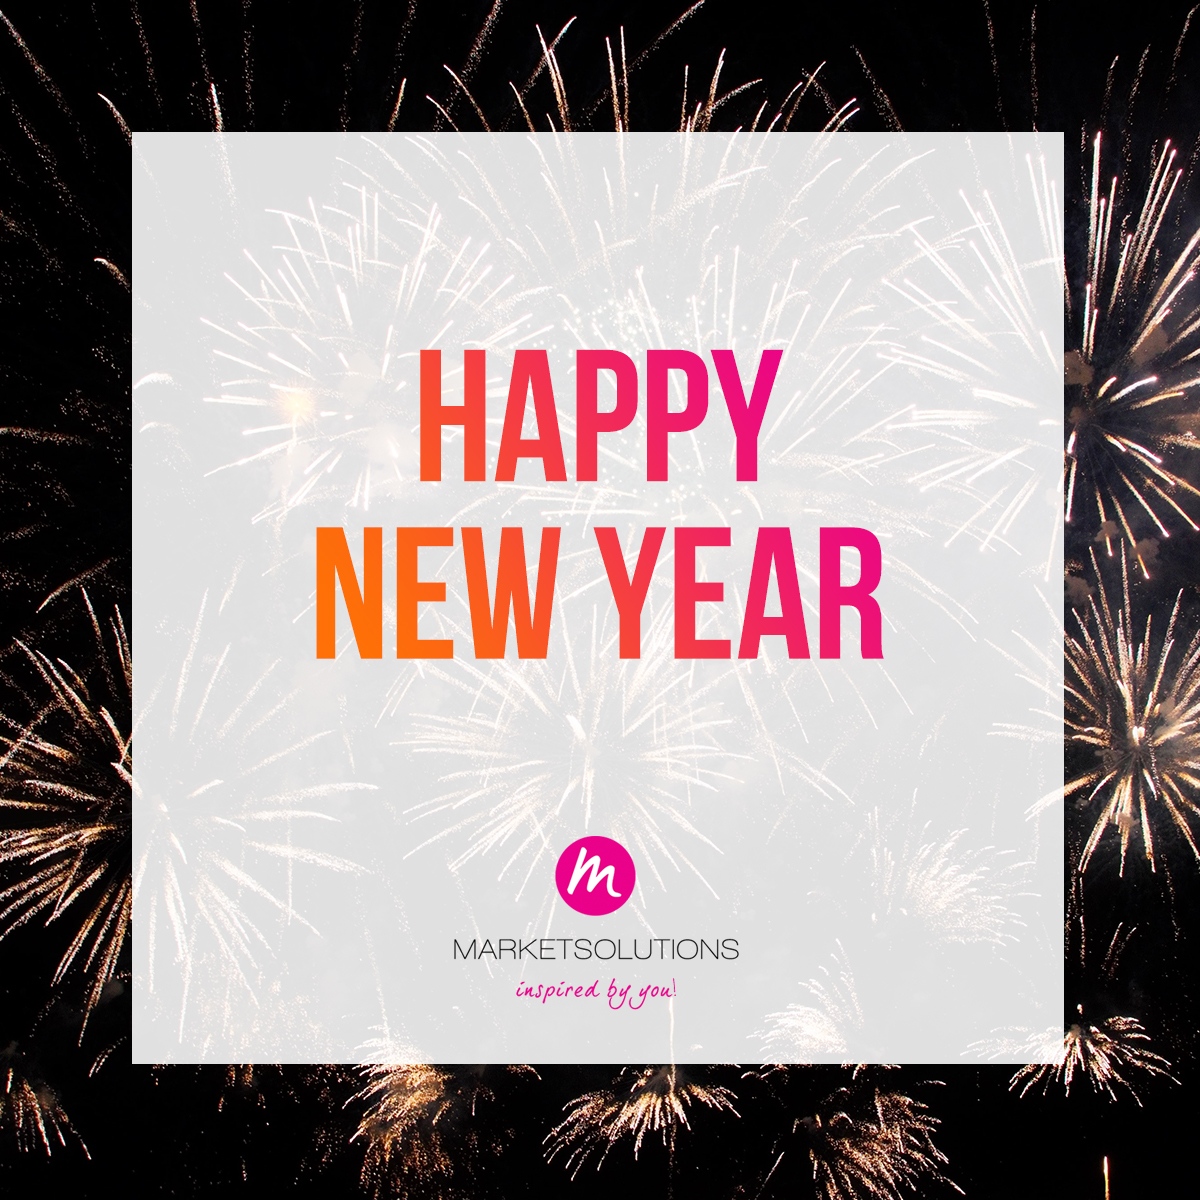 Team Marketsolutions wishes you a healthy, happy and successful New Year. 🎆

#happynewyear #gelukkignieuwjaar #dankbaar